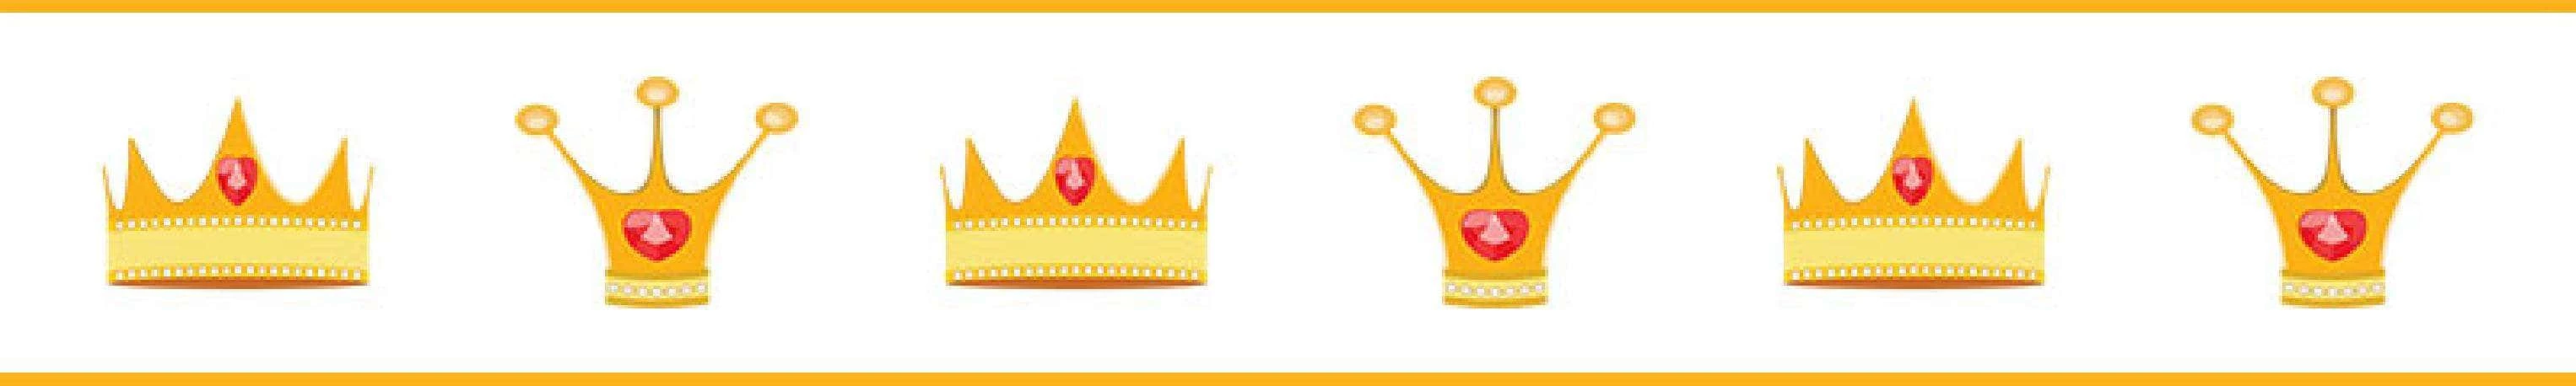 Faixa decorativa coroa de príncipes e reis 744-1235